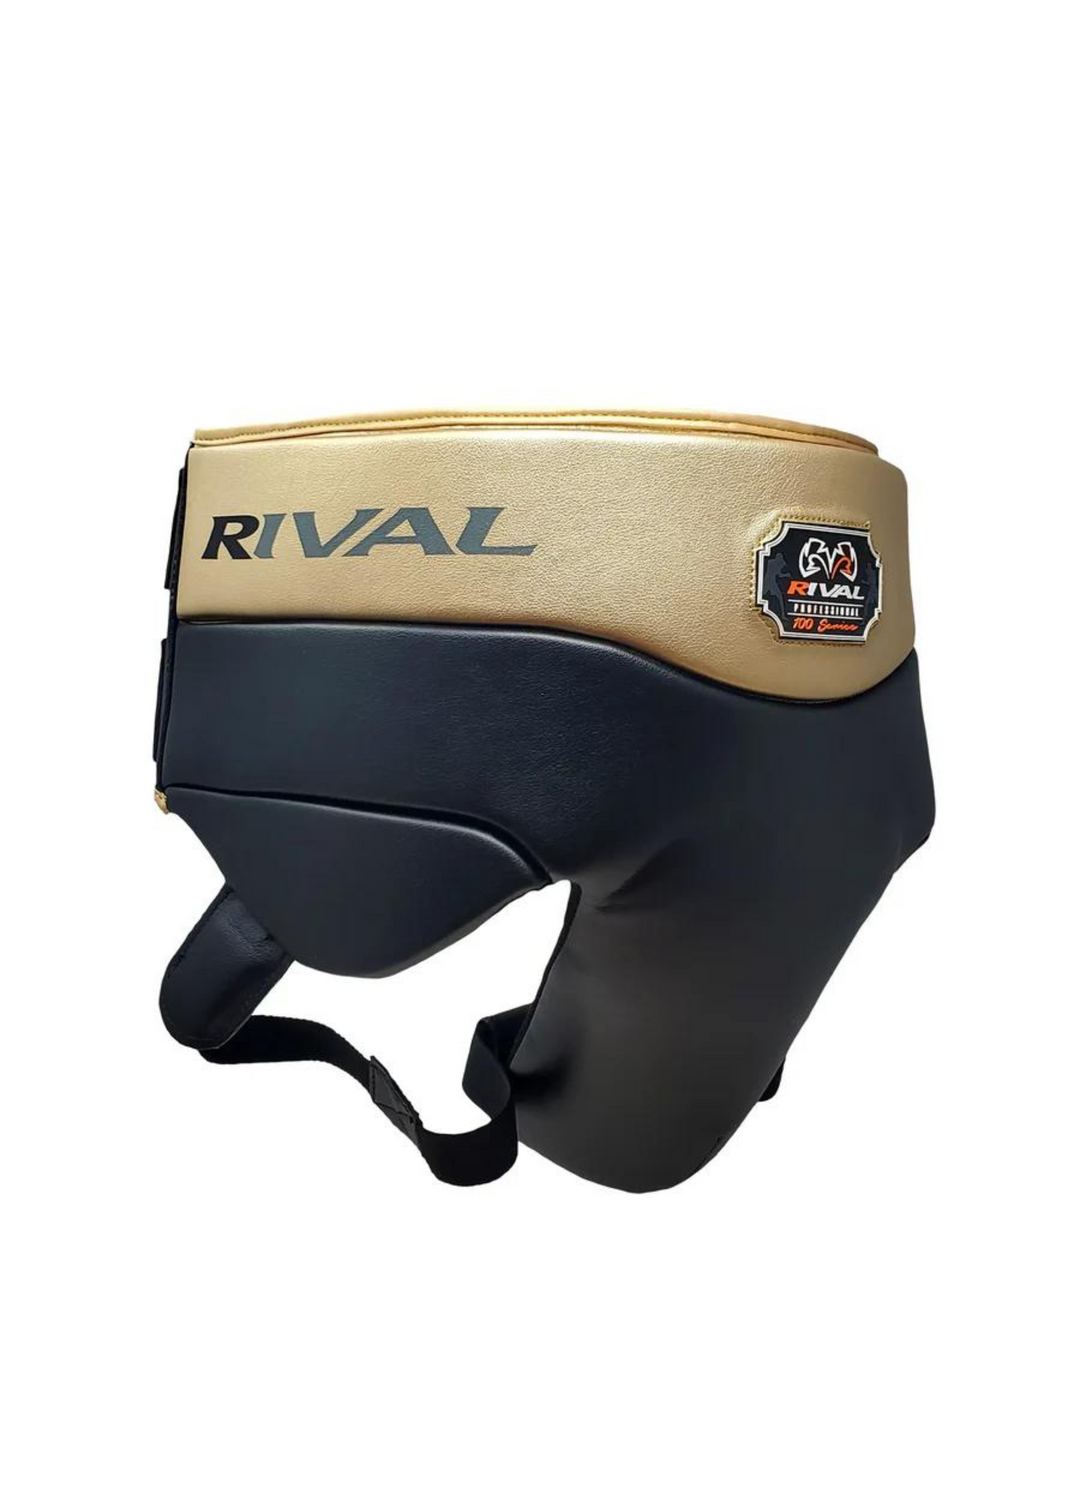 RIVAL RNFL100 PROFESSIONAL PROTECTOR - BLACK/GOLD